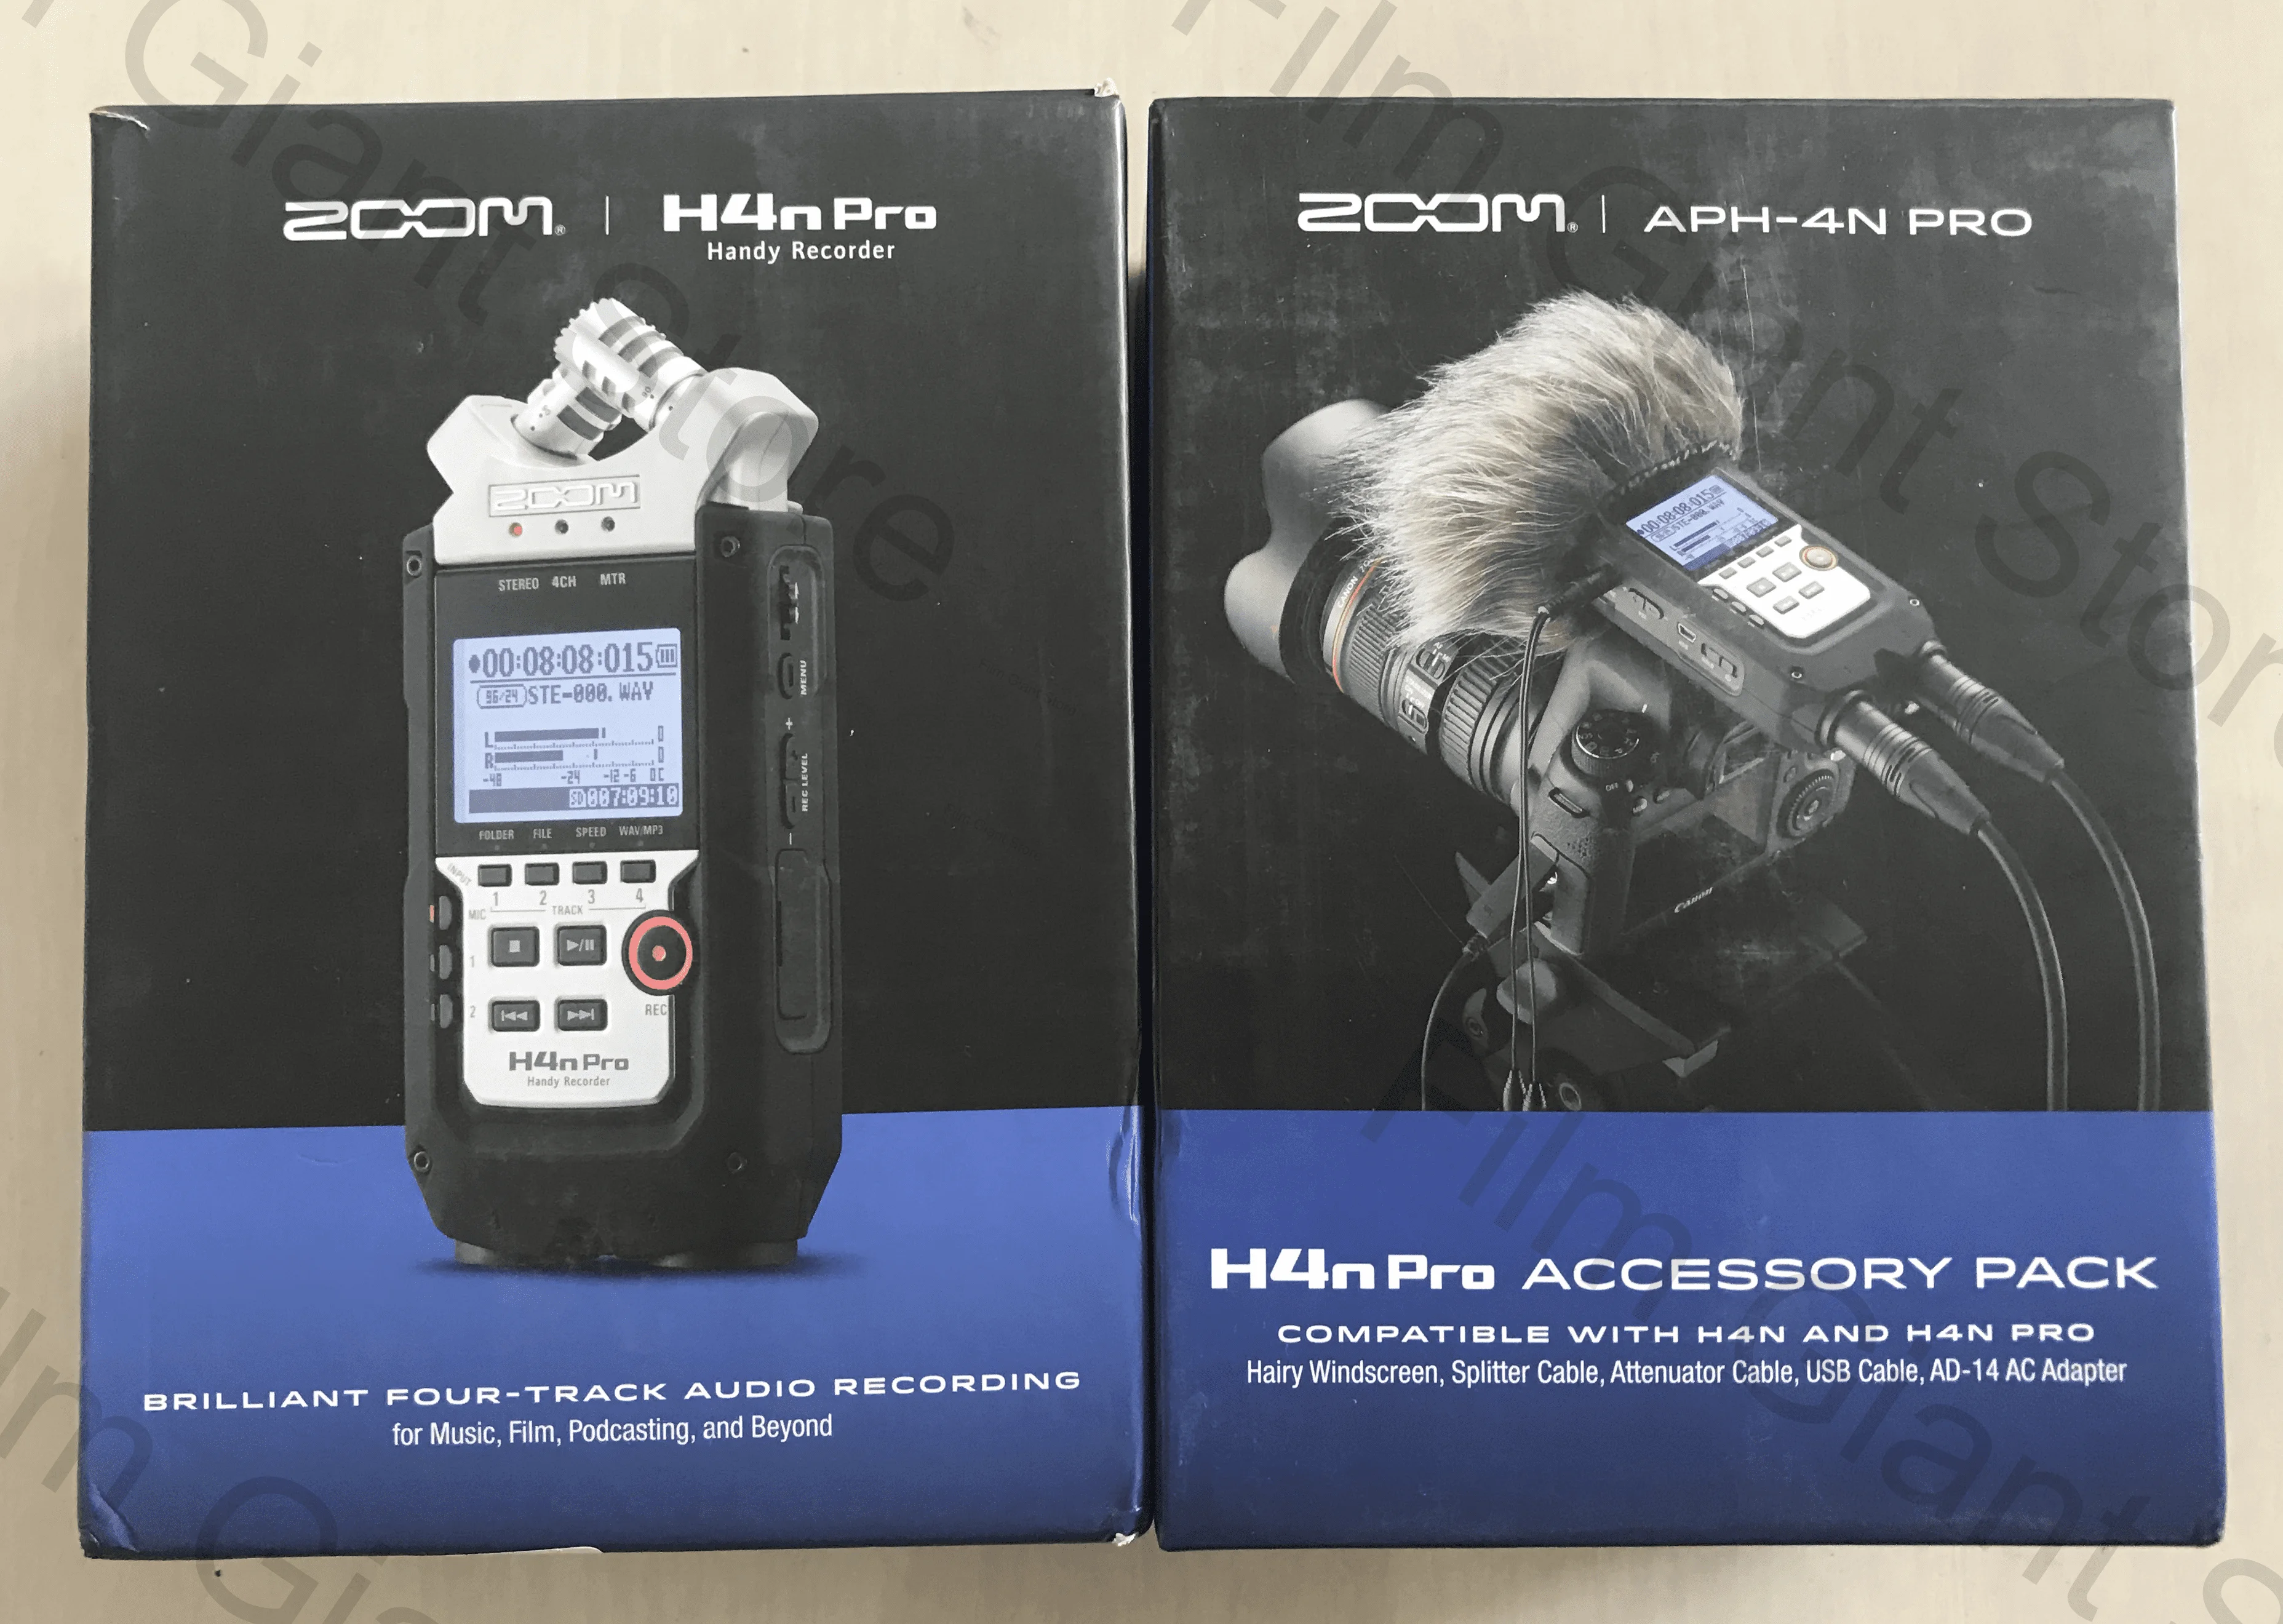 Zoom H4n Pro Handy Recorder (Black)